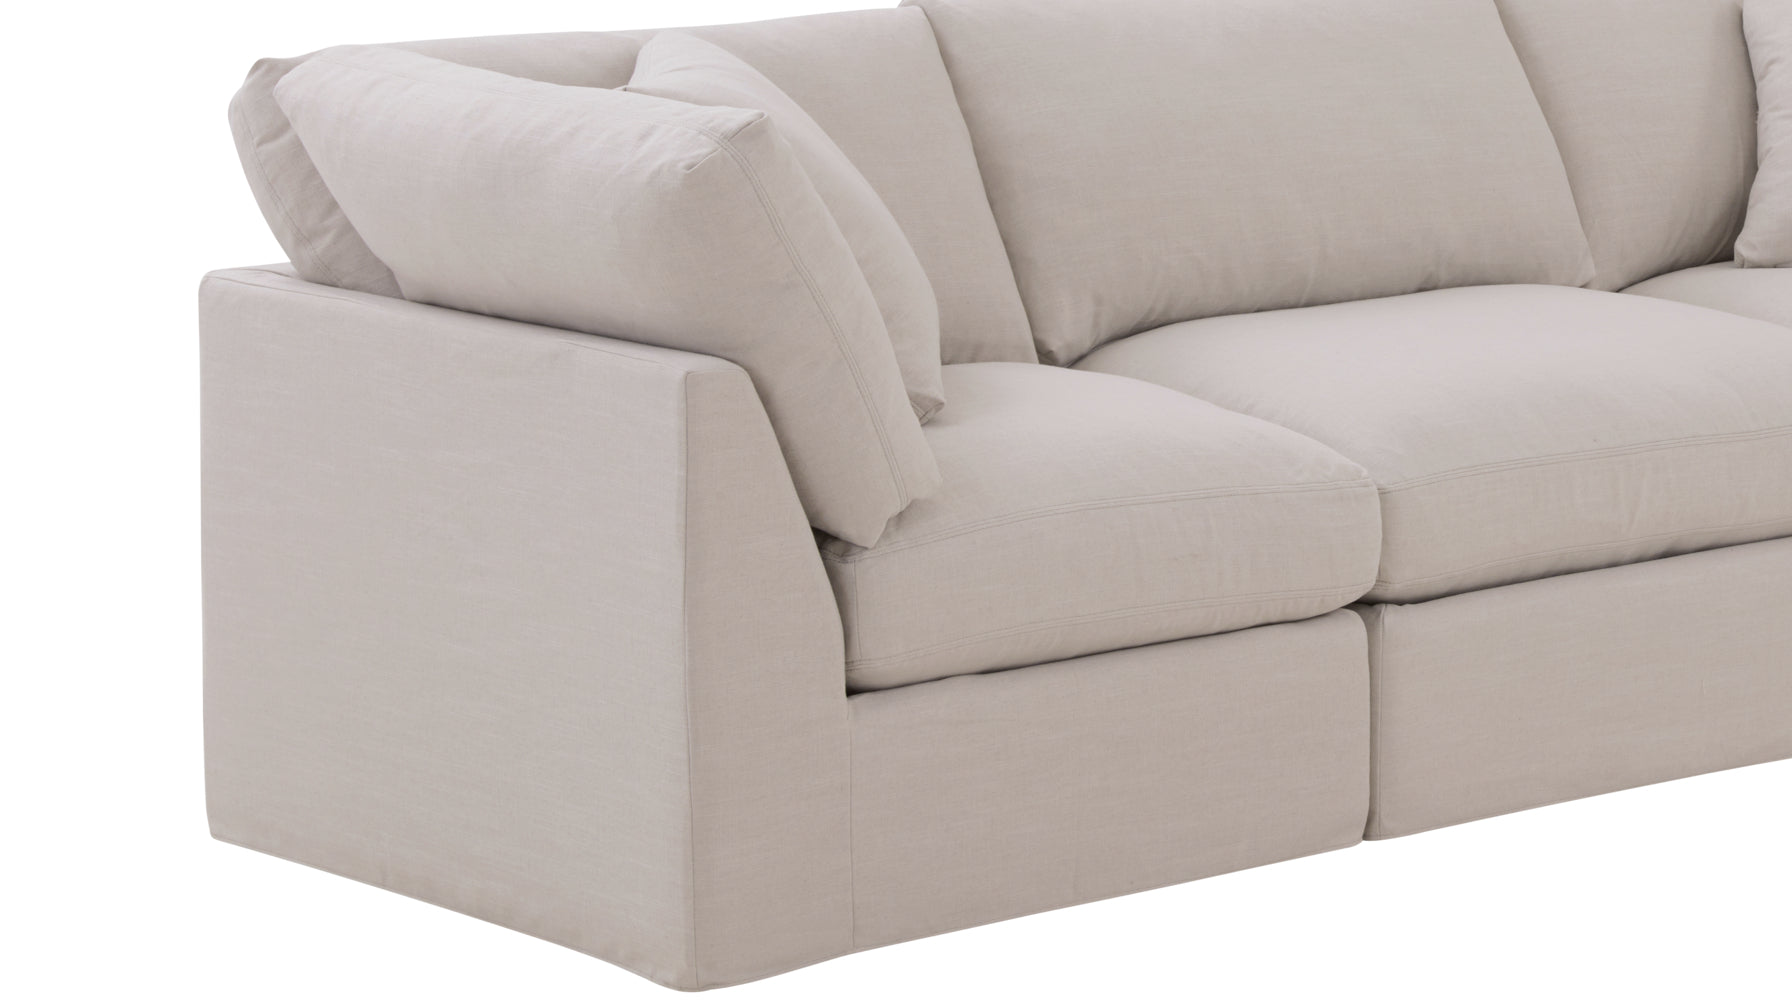 Get Together™ 3-Piece Modular Sofa, Standard, Clay - Image 8